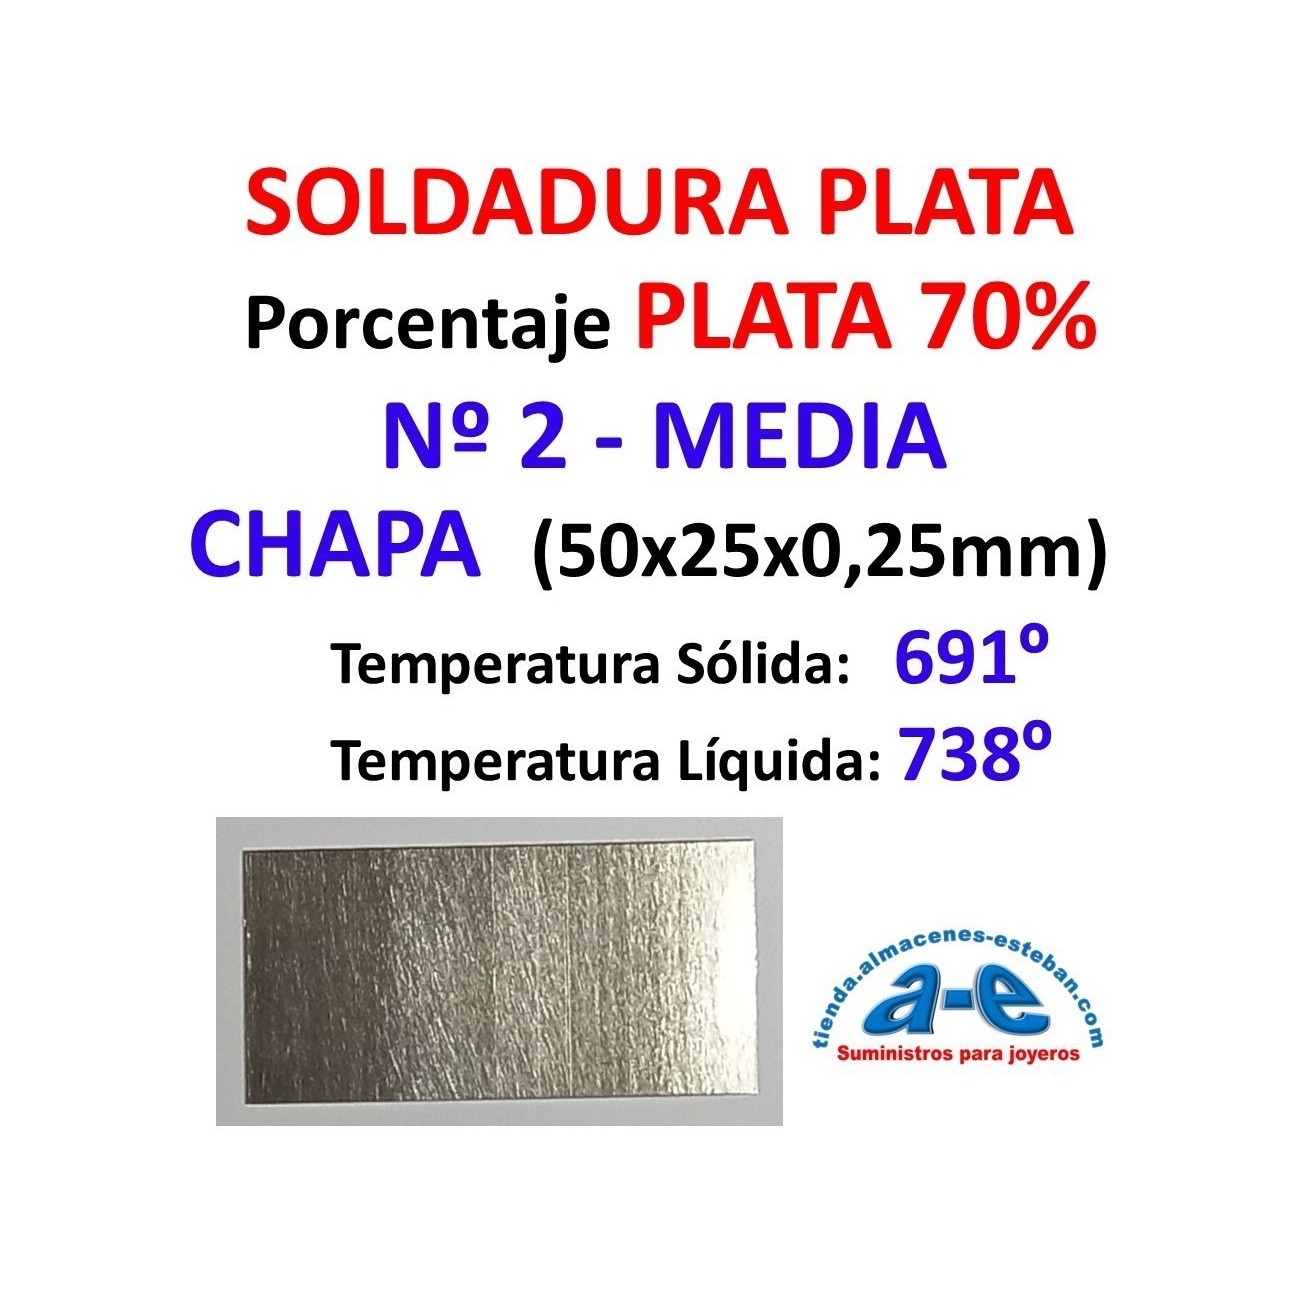 SOLDADURA PLATA N. 2 - 70% MEDIA USA CHAPA